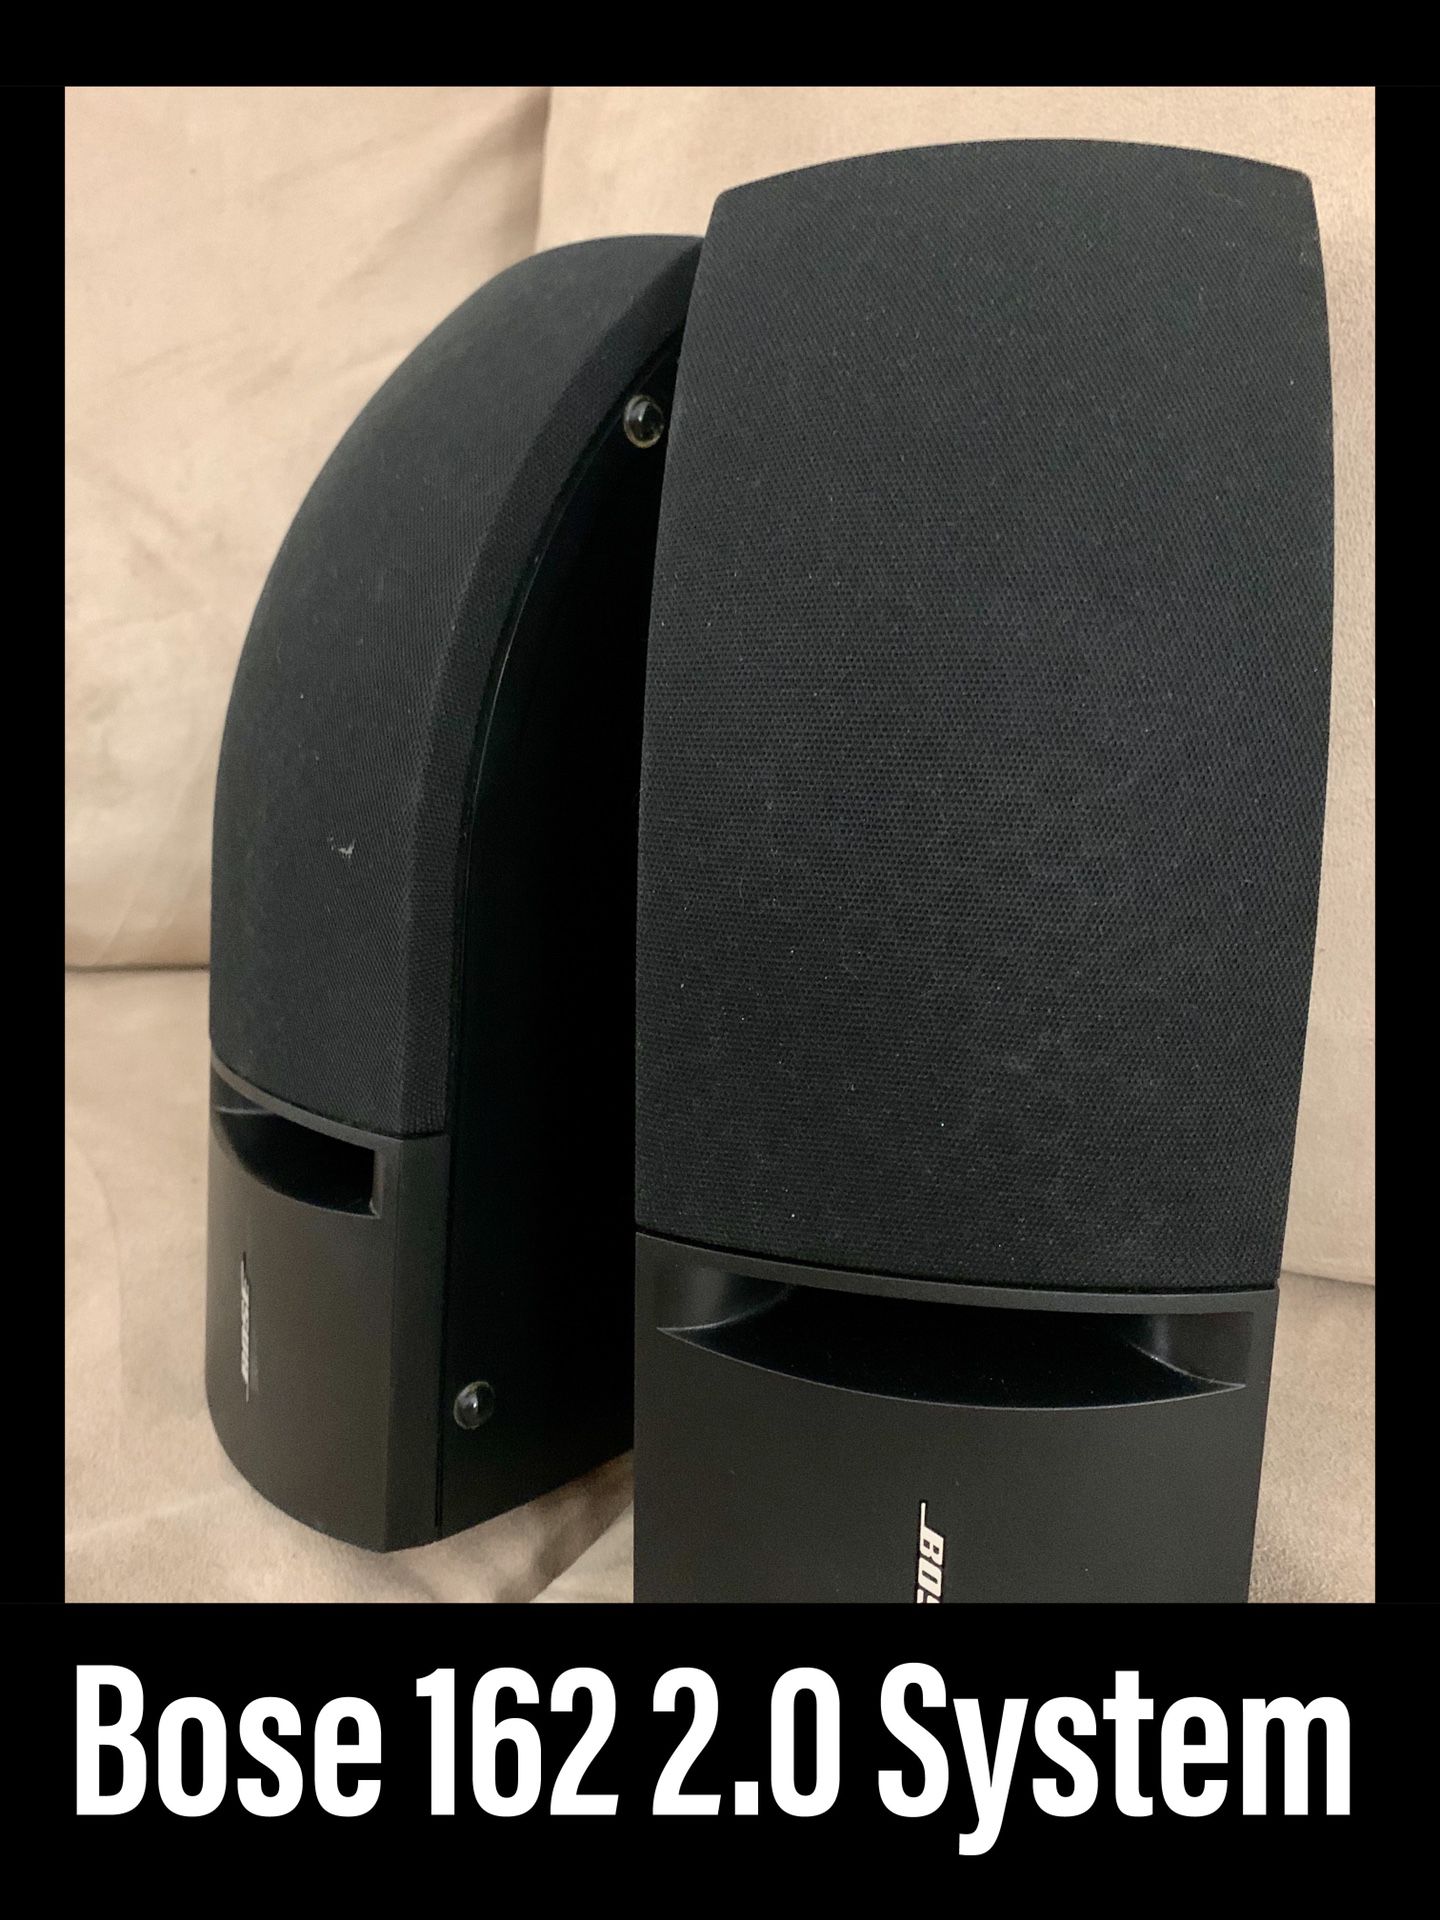 NEW/Open Box Bose 161 Surround Sound, Mid Range 2.0 Speaker System. Black Finish